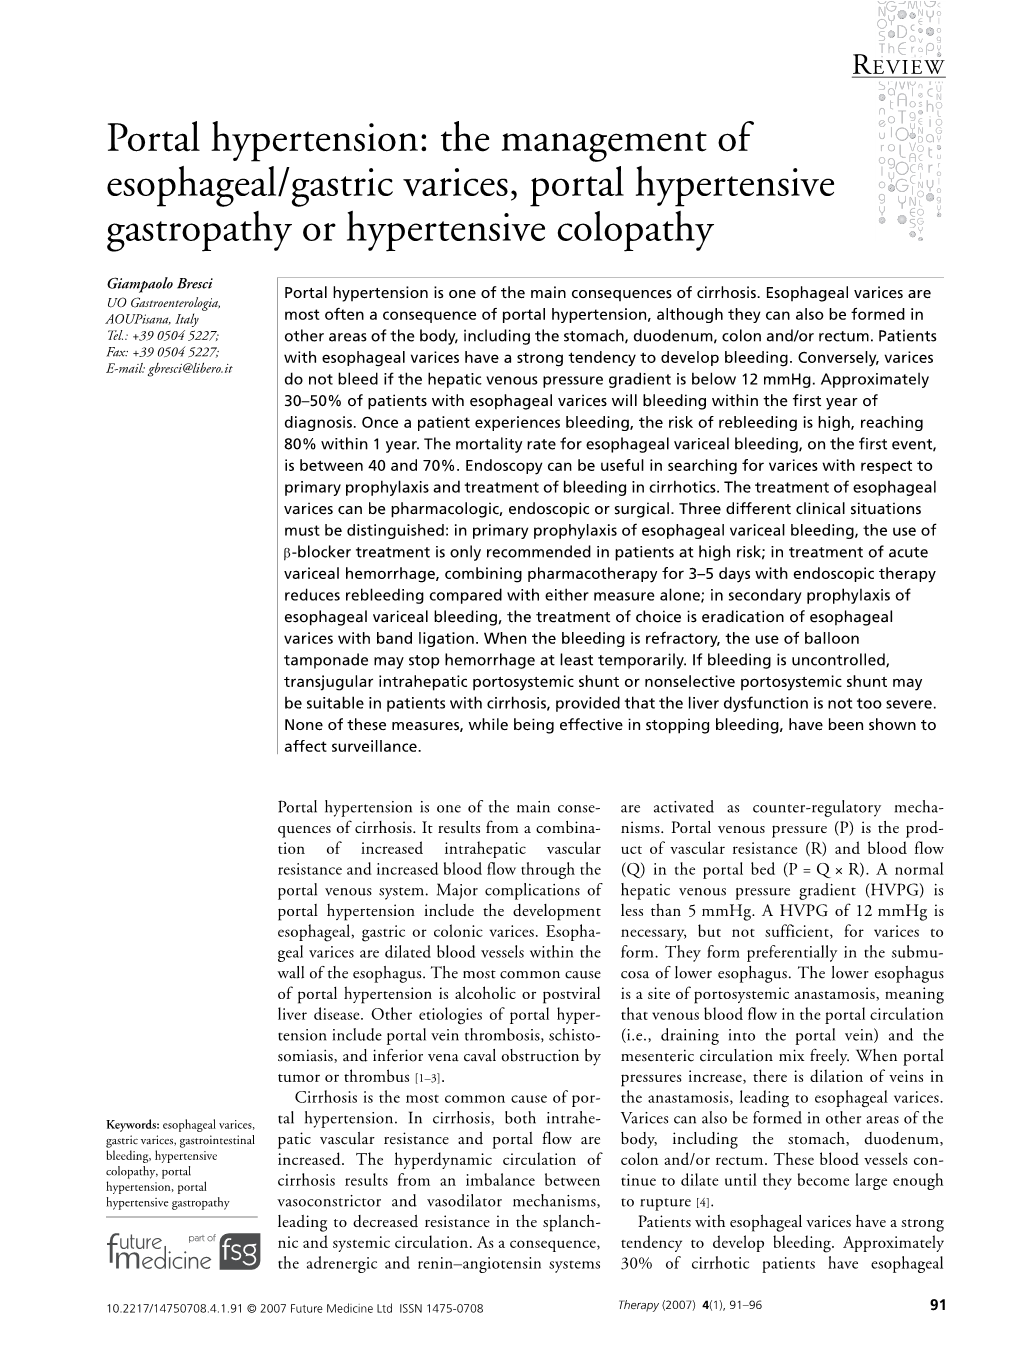 Portal Hypertension: the Management of Esophageal/Gastric Varices, Portal Hypertensive Gastropathy Or Hypertensive Colopathy